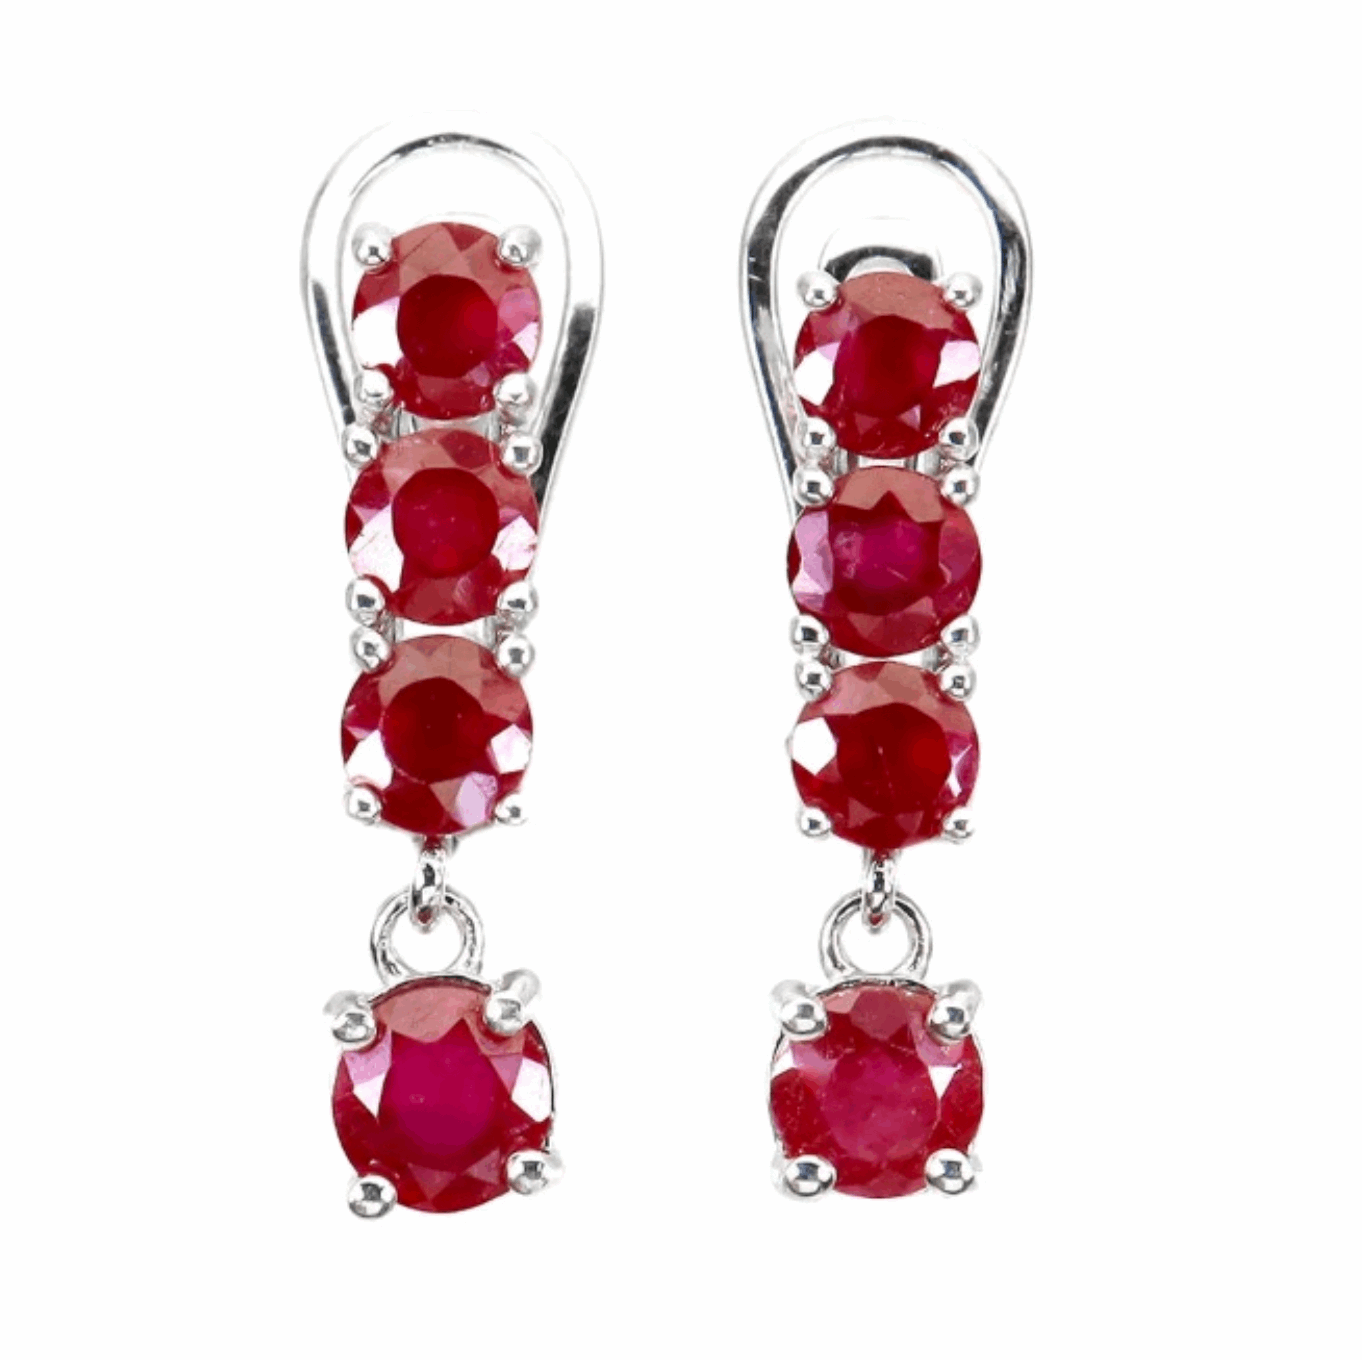 Deluxe Natural Blood Red Ruby Gemstone Set in Solid .925 Sterling Silver Earrings - BELLADONNA